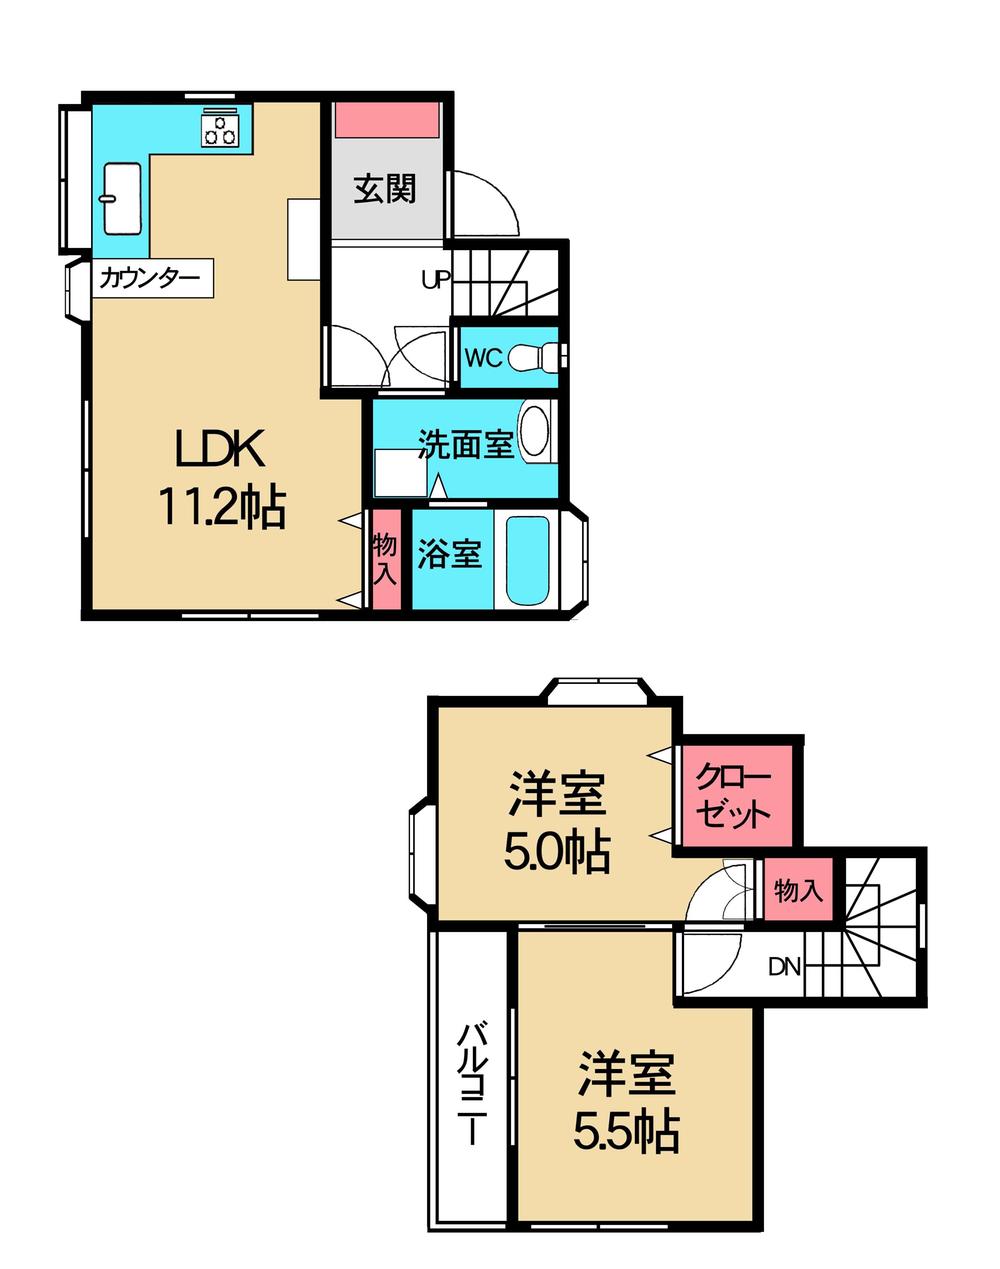 Floor plan. 14 million yen, 2LDK, Land area 70.34 sq m , Building area 56.18 sq m floor plan